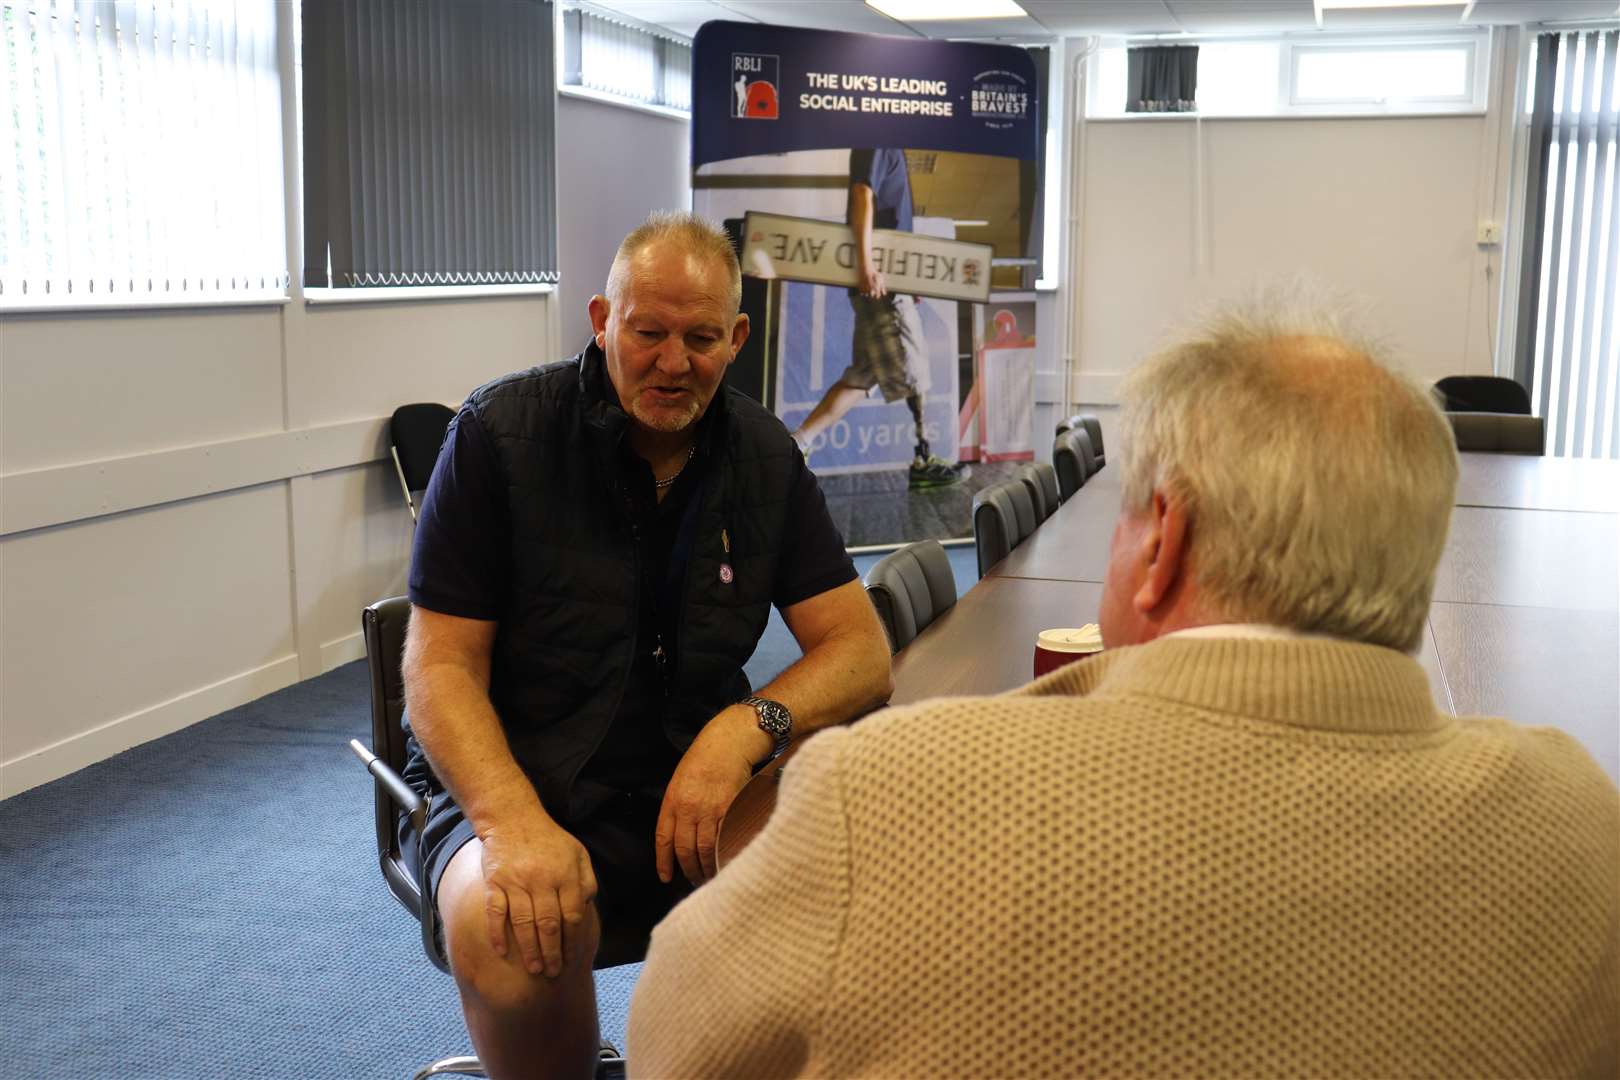 Steve Hammond tells his story to reporter Alan Smith